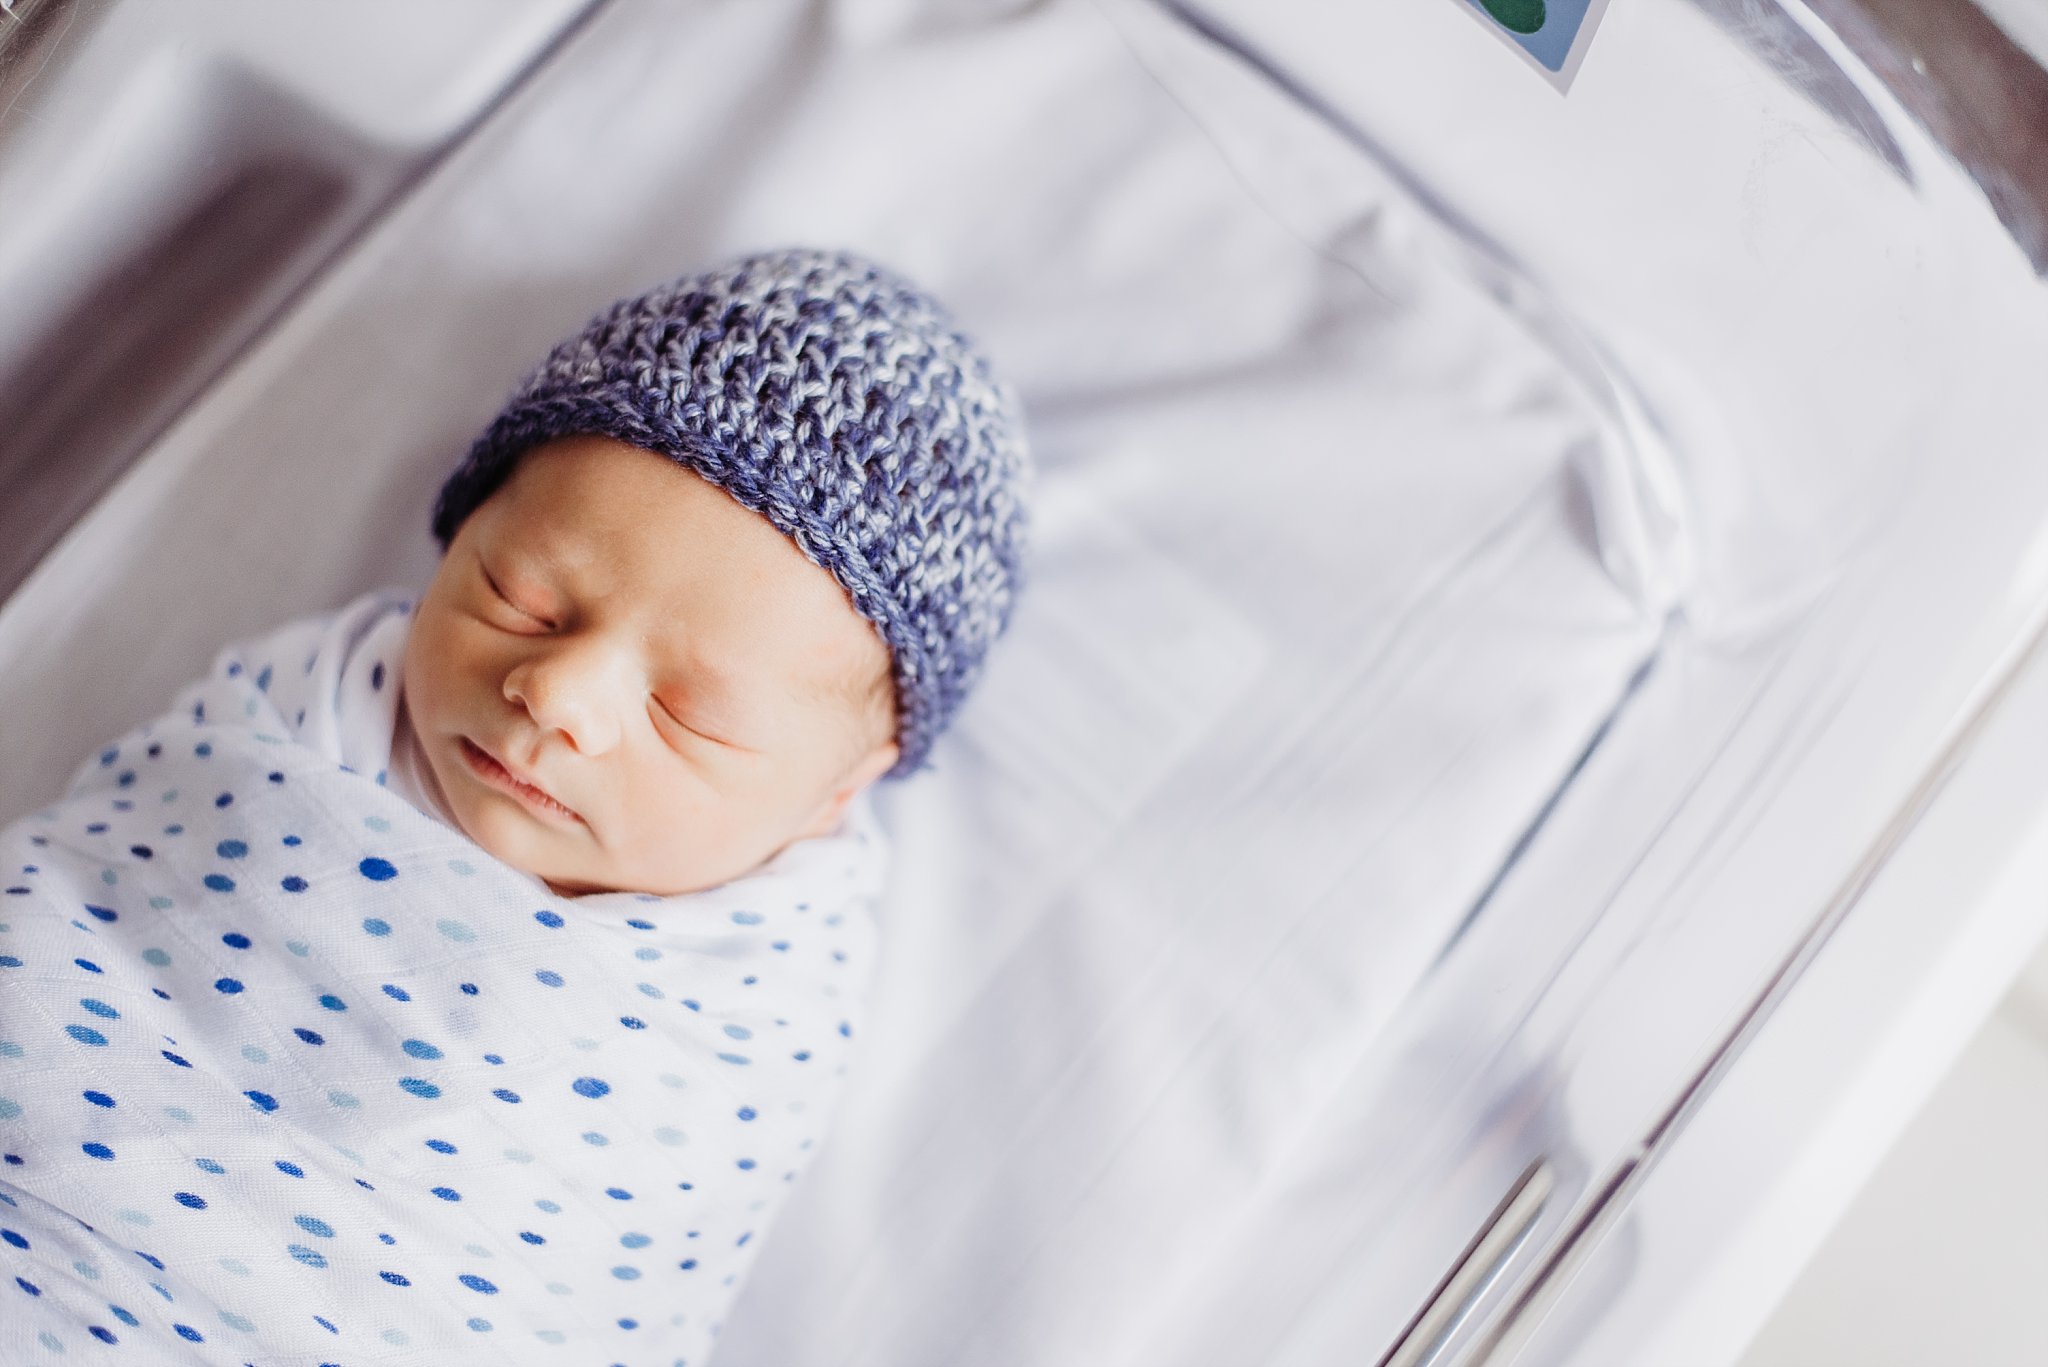 newborn baby boy with blue hat on in hospital bassinet Piedmont Atlanta hospital